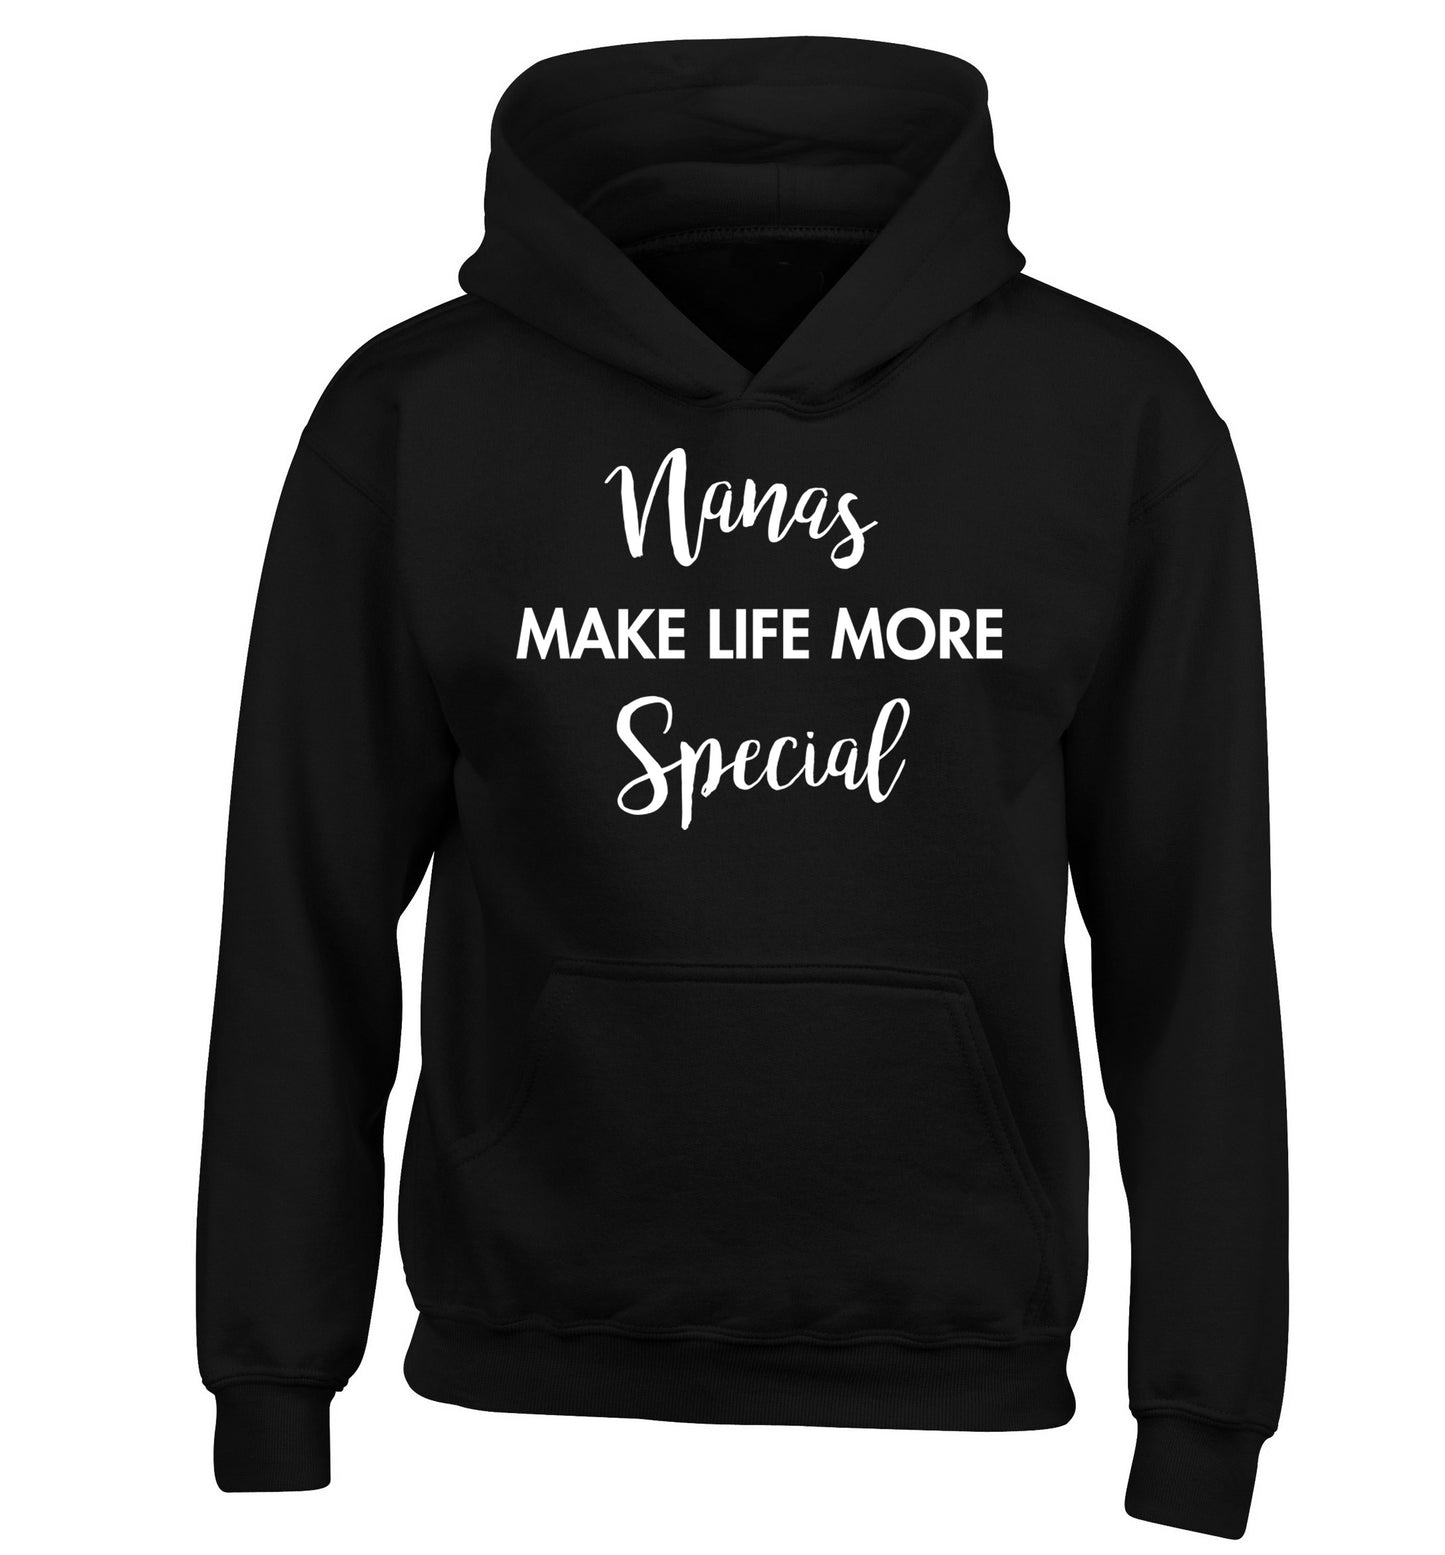 Nanas make life more special children's black hoodie 12-14 Years